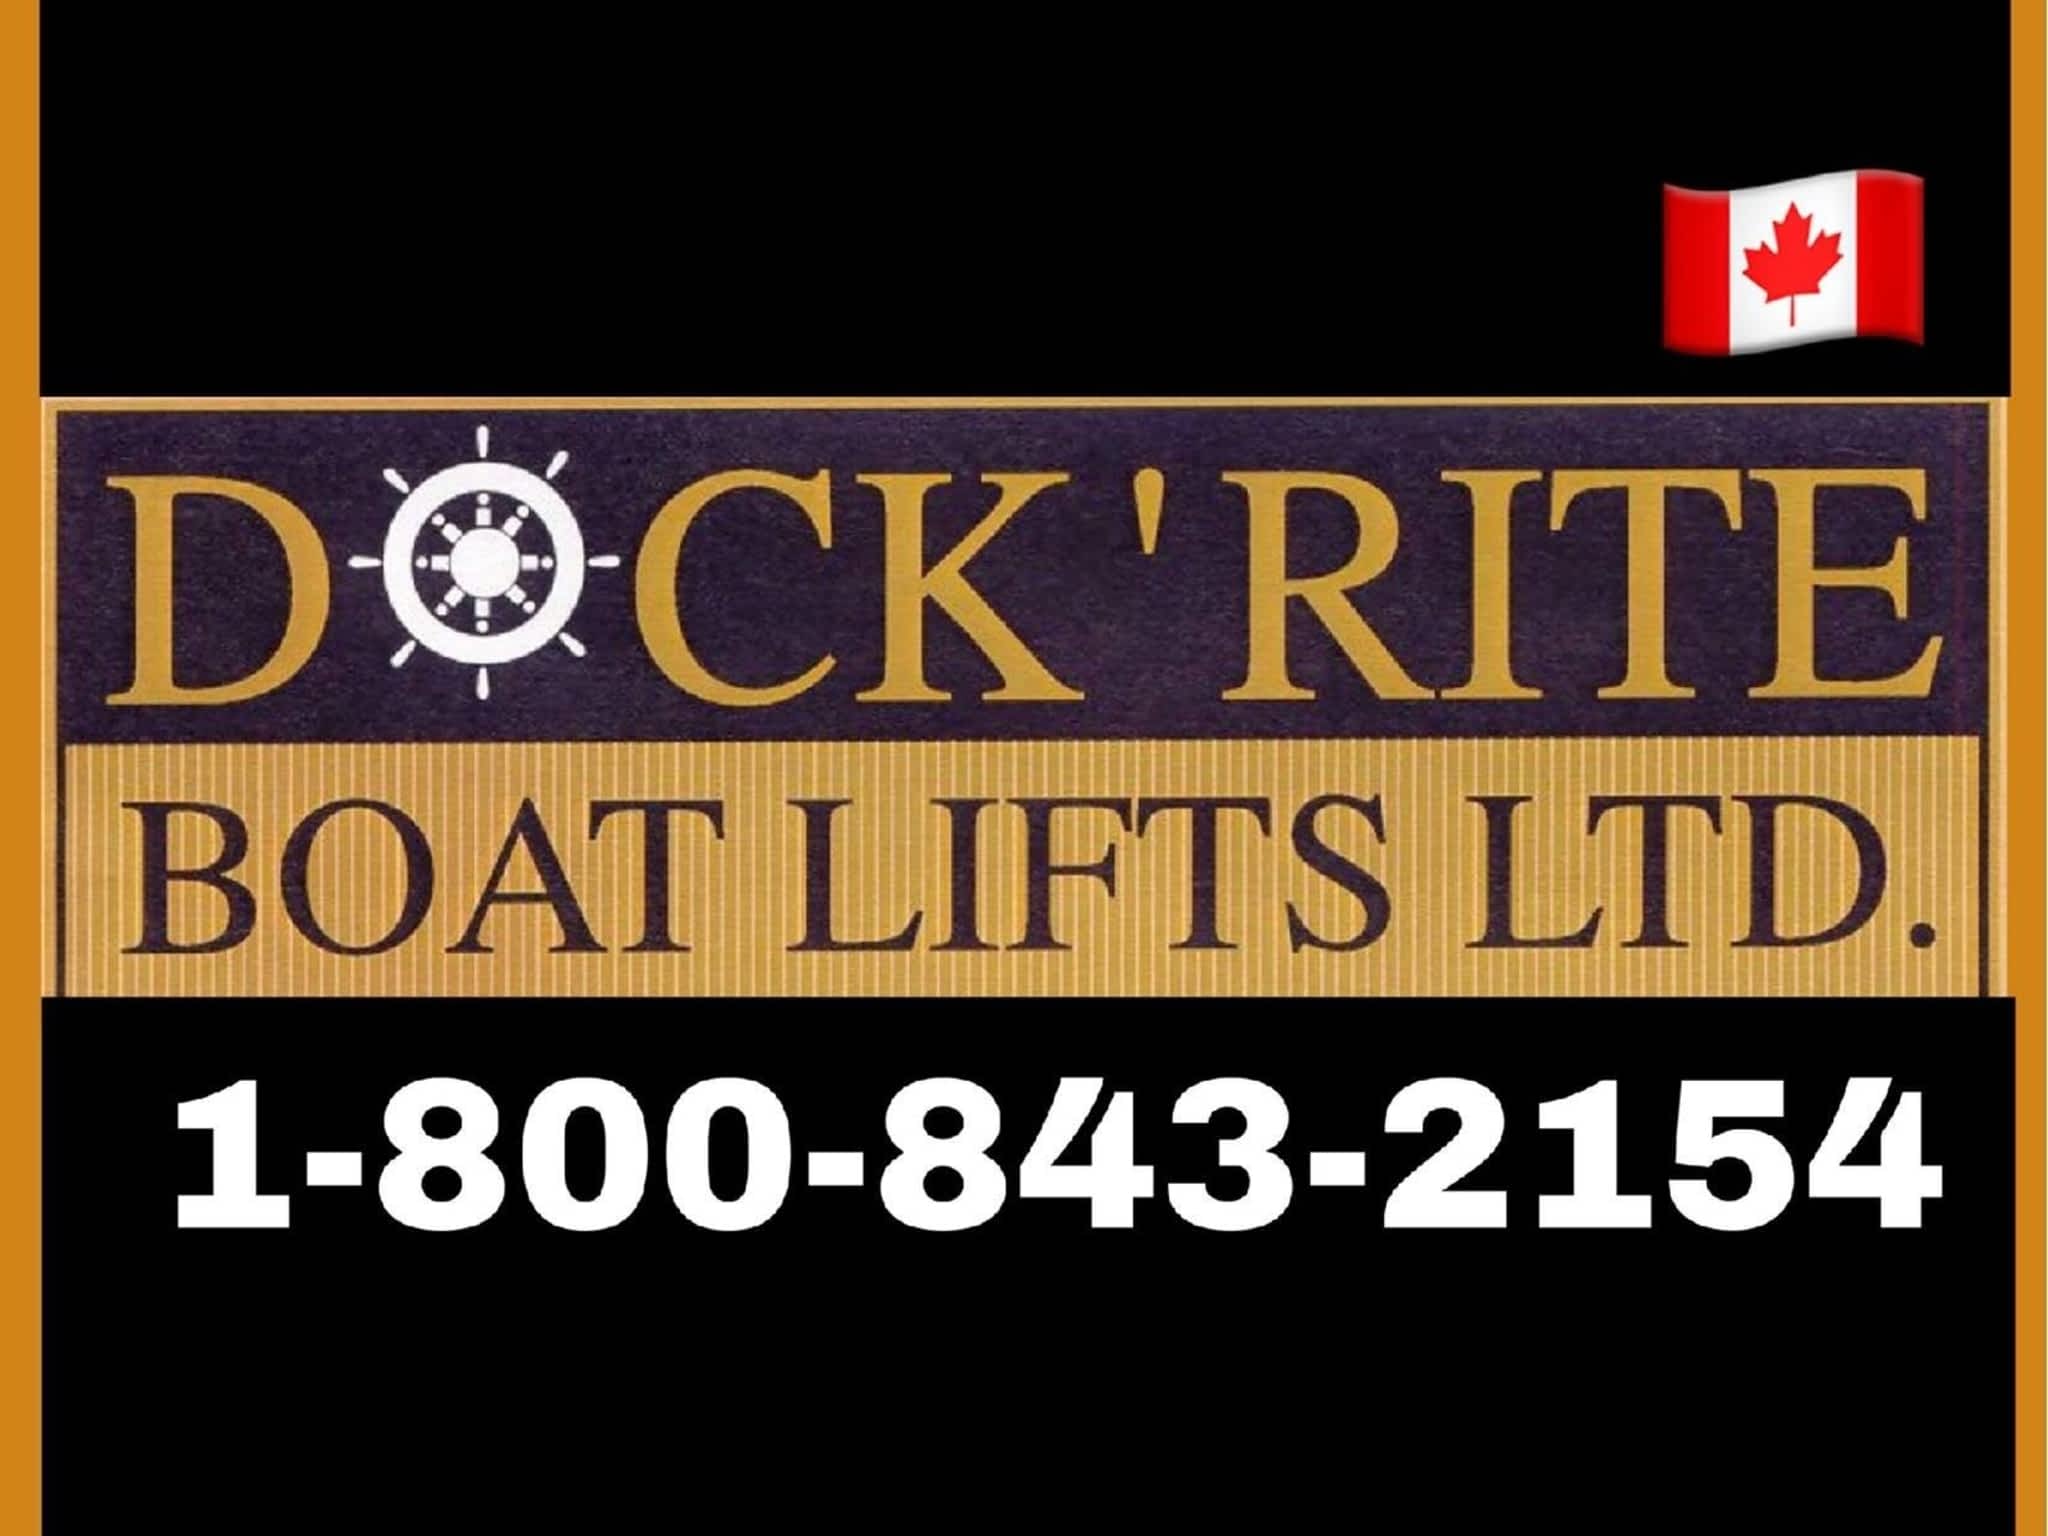 photo Dock'Rite Boat Lifts Ltd